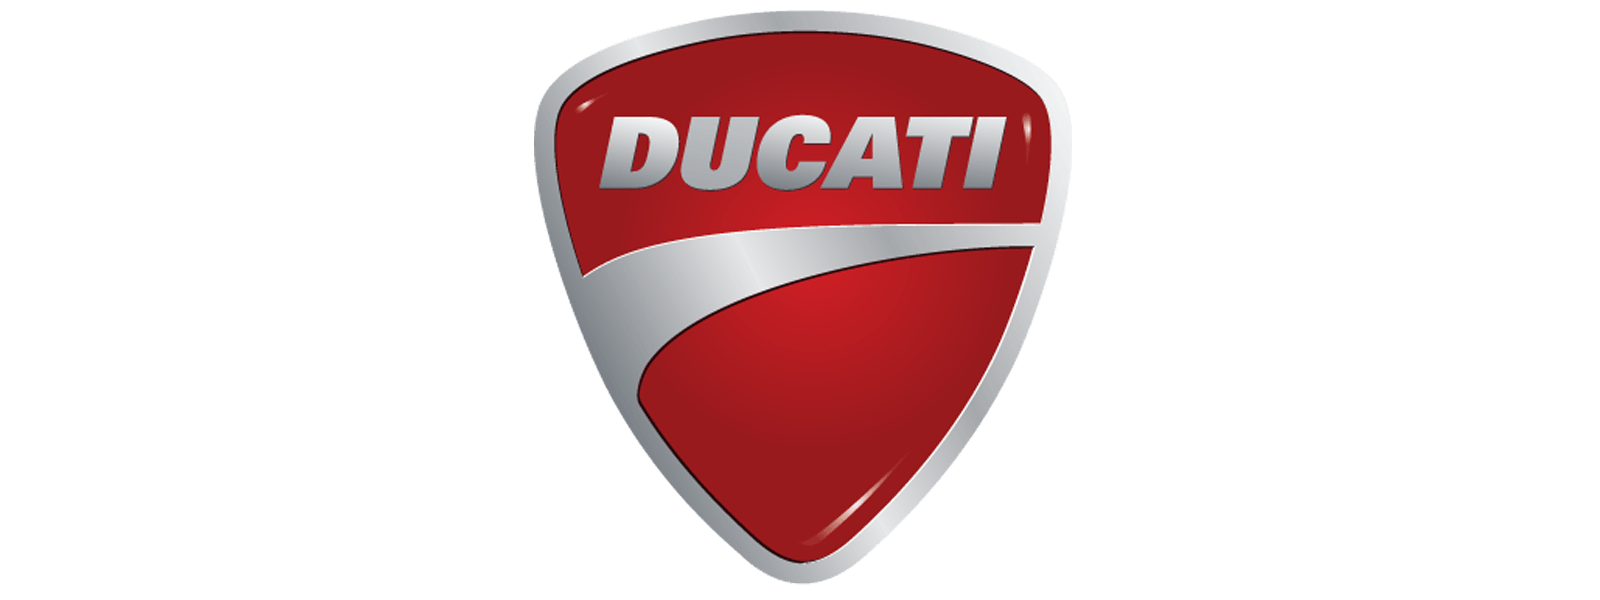 Ducati Logo - Ducati Logo | Motorcycle brands: logo, specs, history.